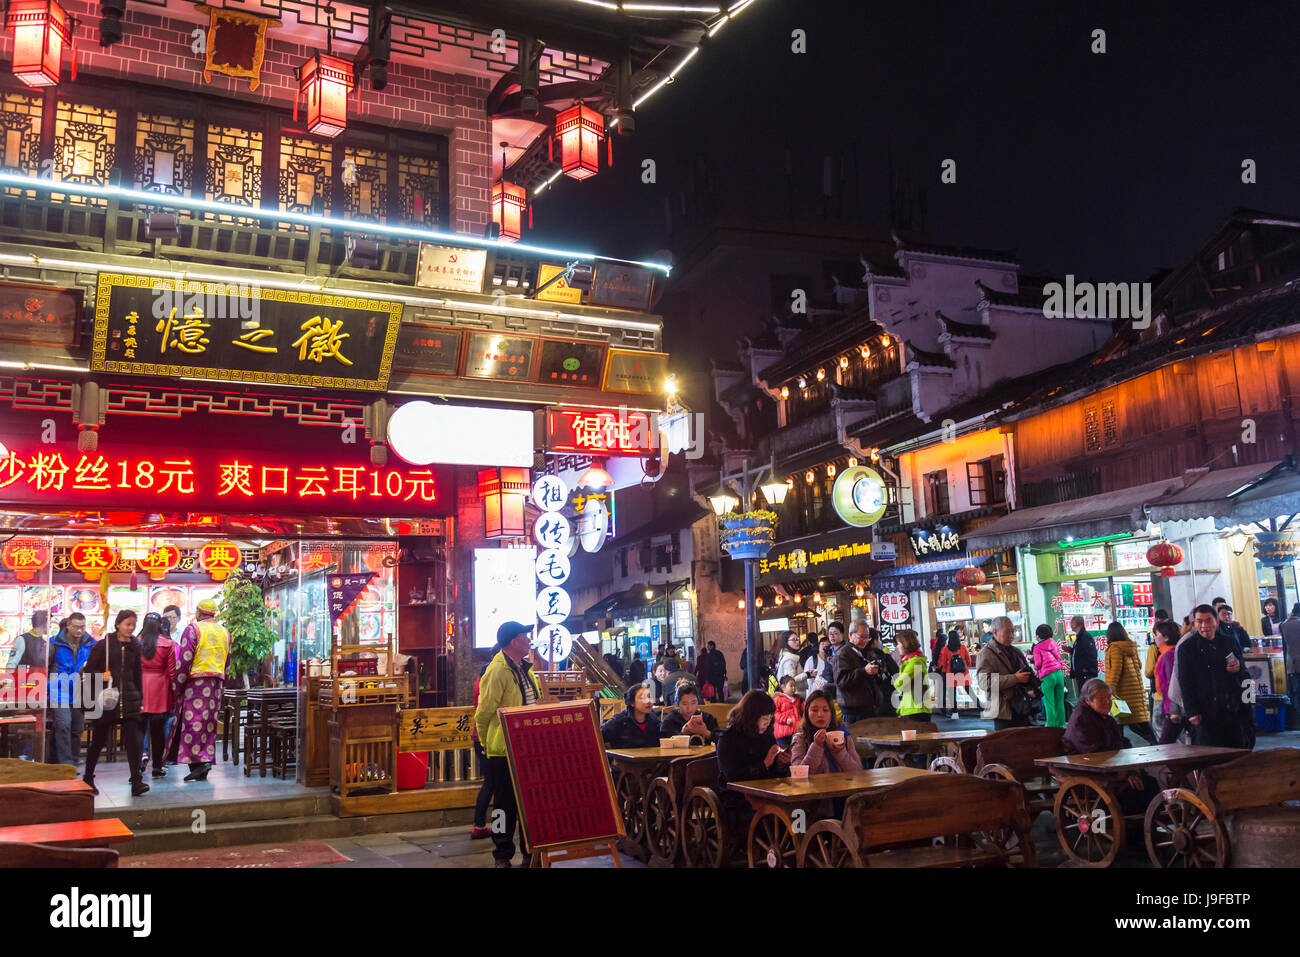 Tunxi Old Street, traditional shopping hub, Huangshan, Anhui province, China Stock Photo